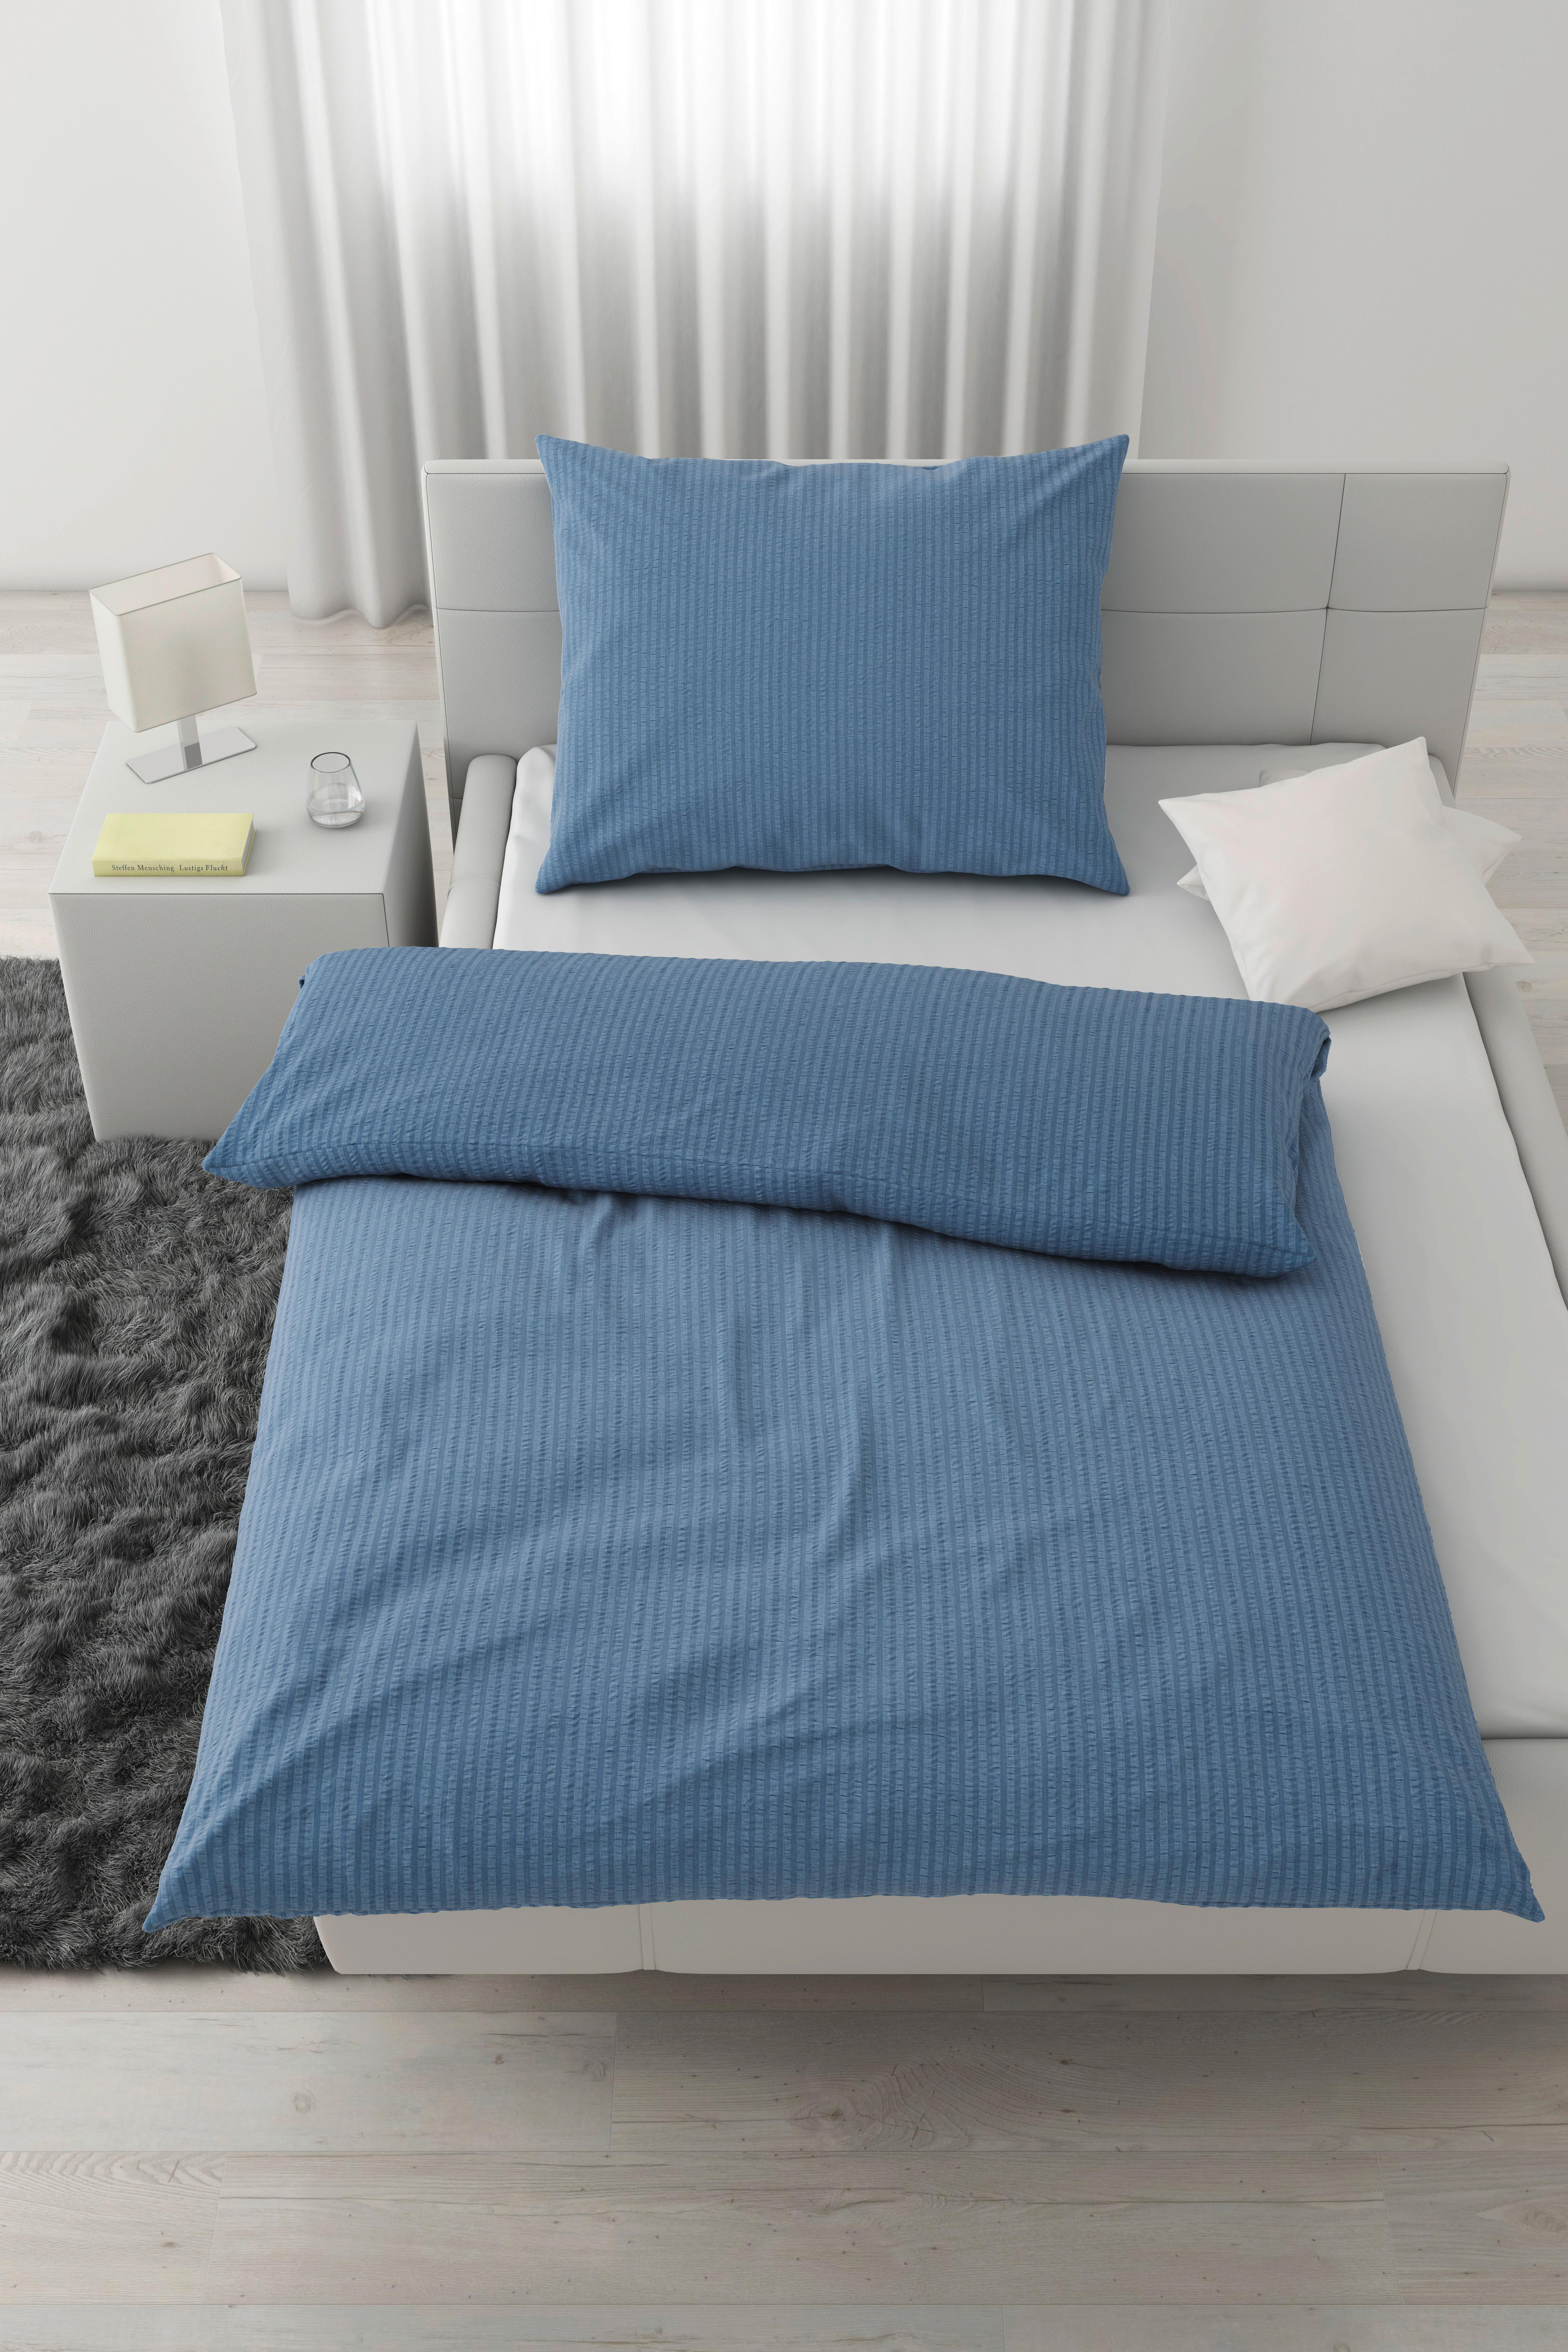 POŚCIEL BABS - niebieski, Modern, tkanina (140/200cm) - Modern Living